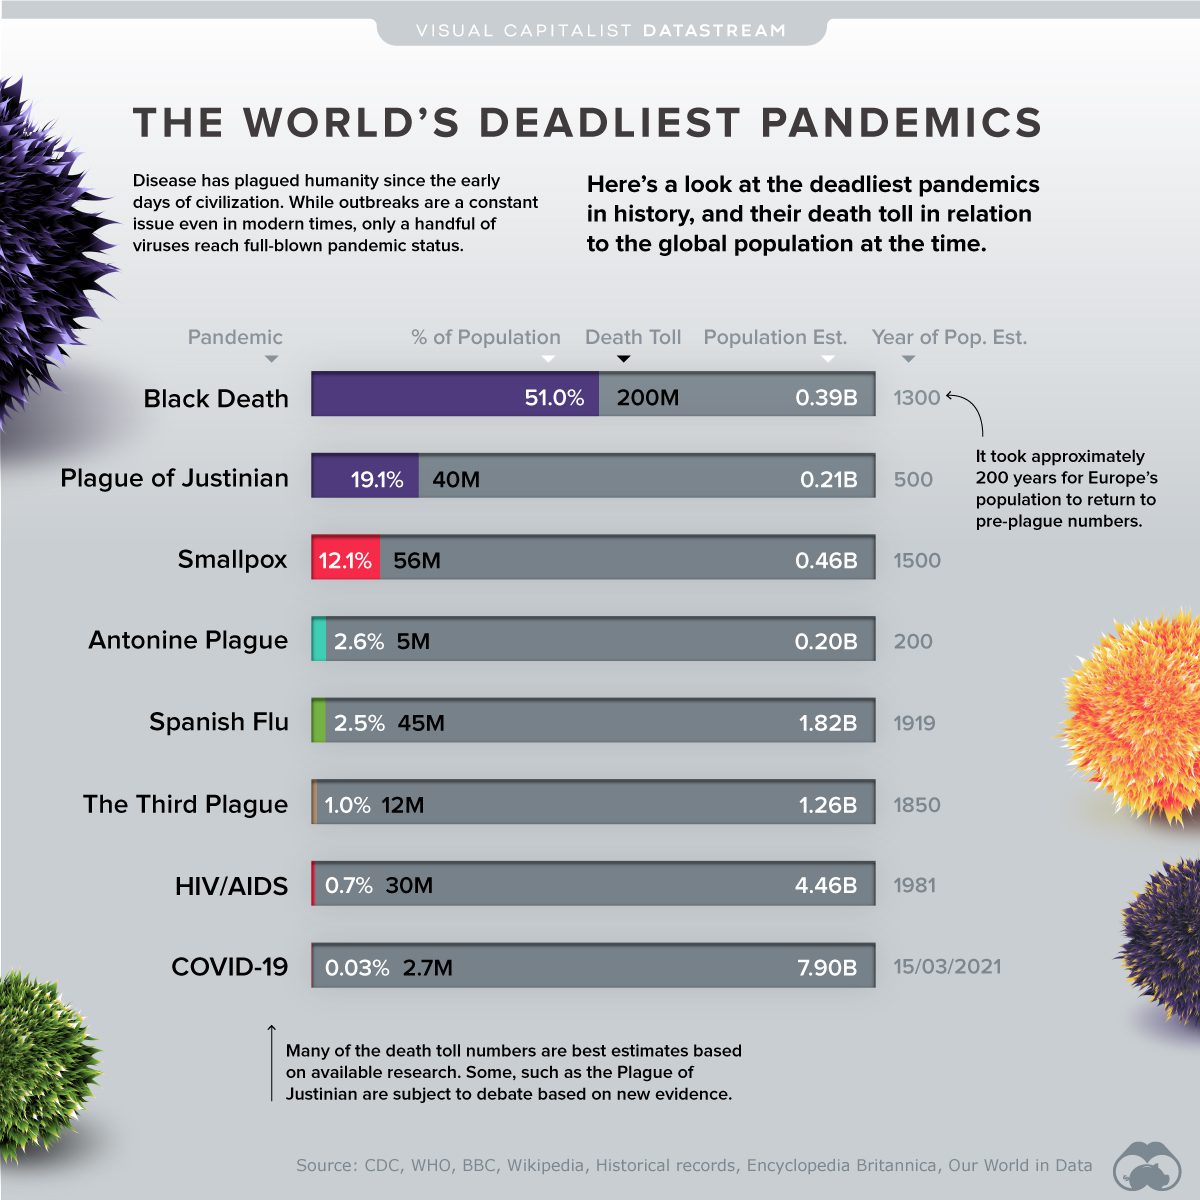 https://www.thegatewaypundit.com/wp-content/uploads/deadliest-pandemics-visualized.jpg